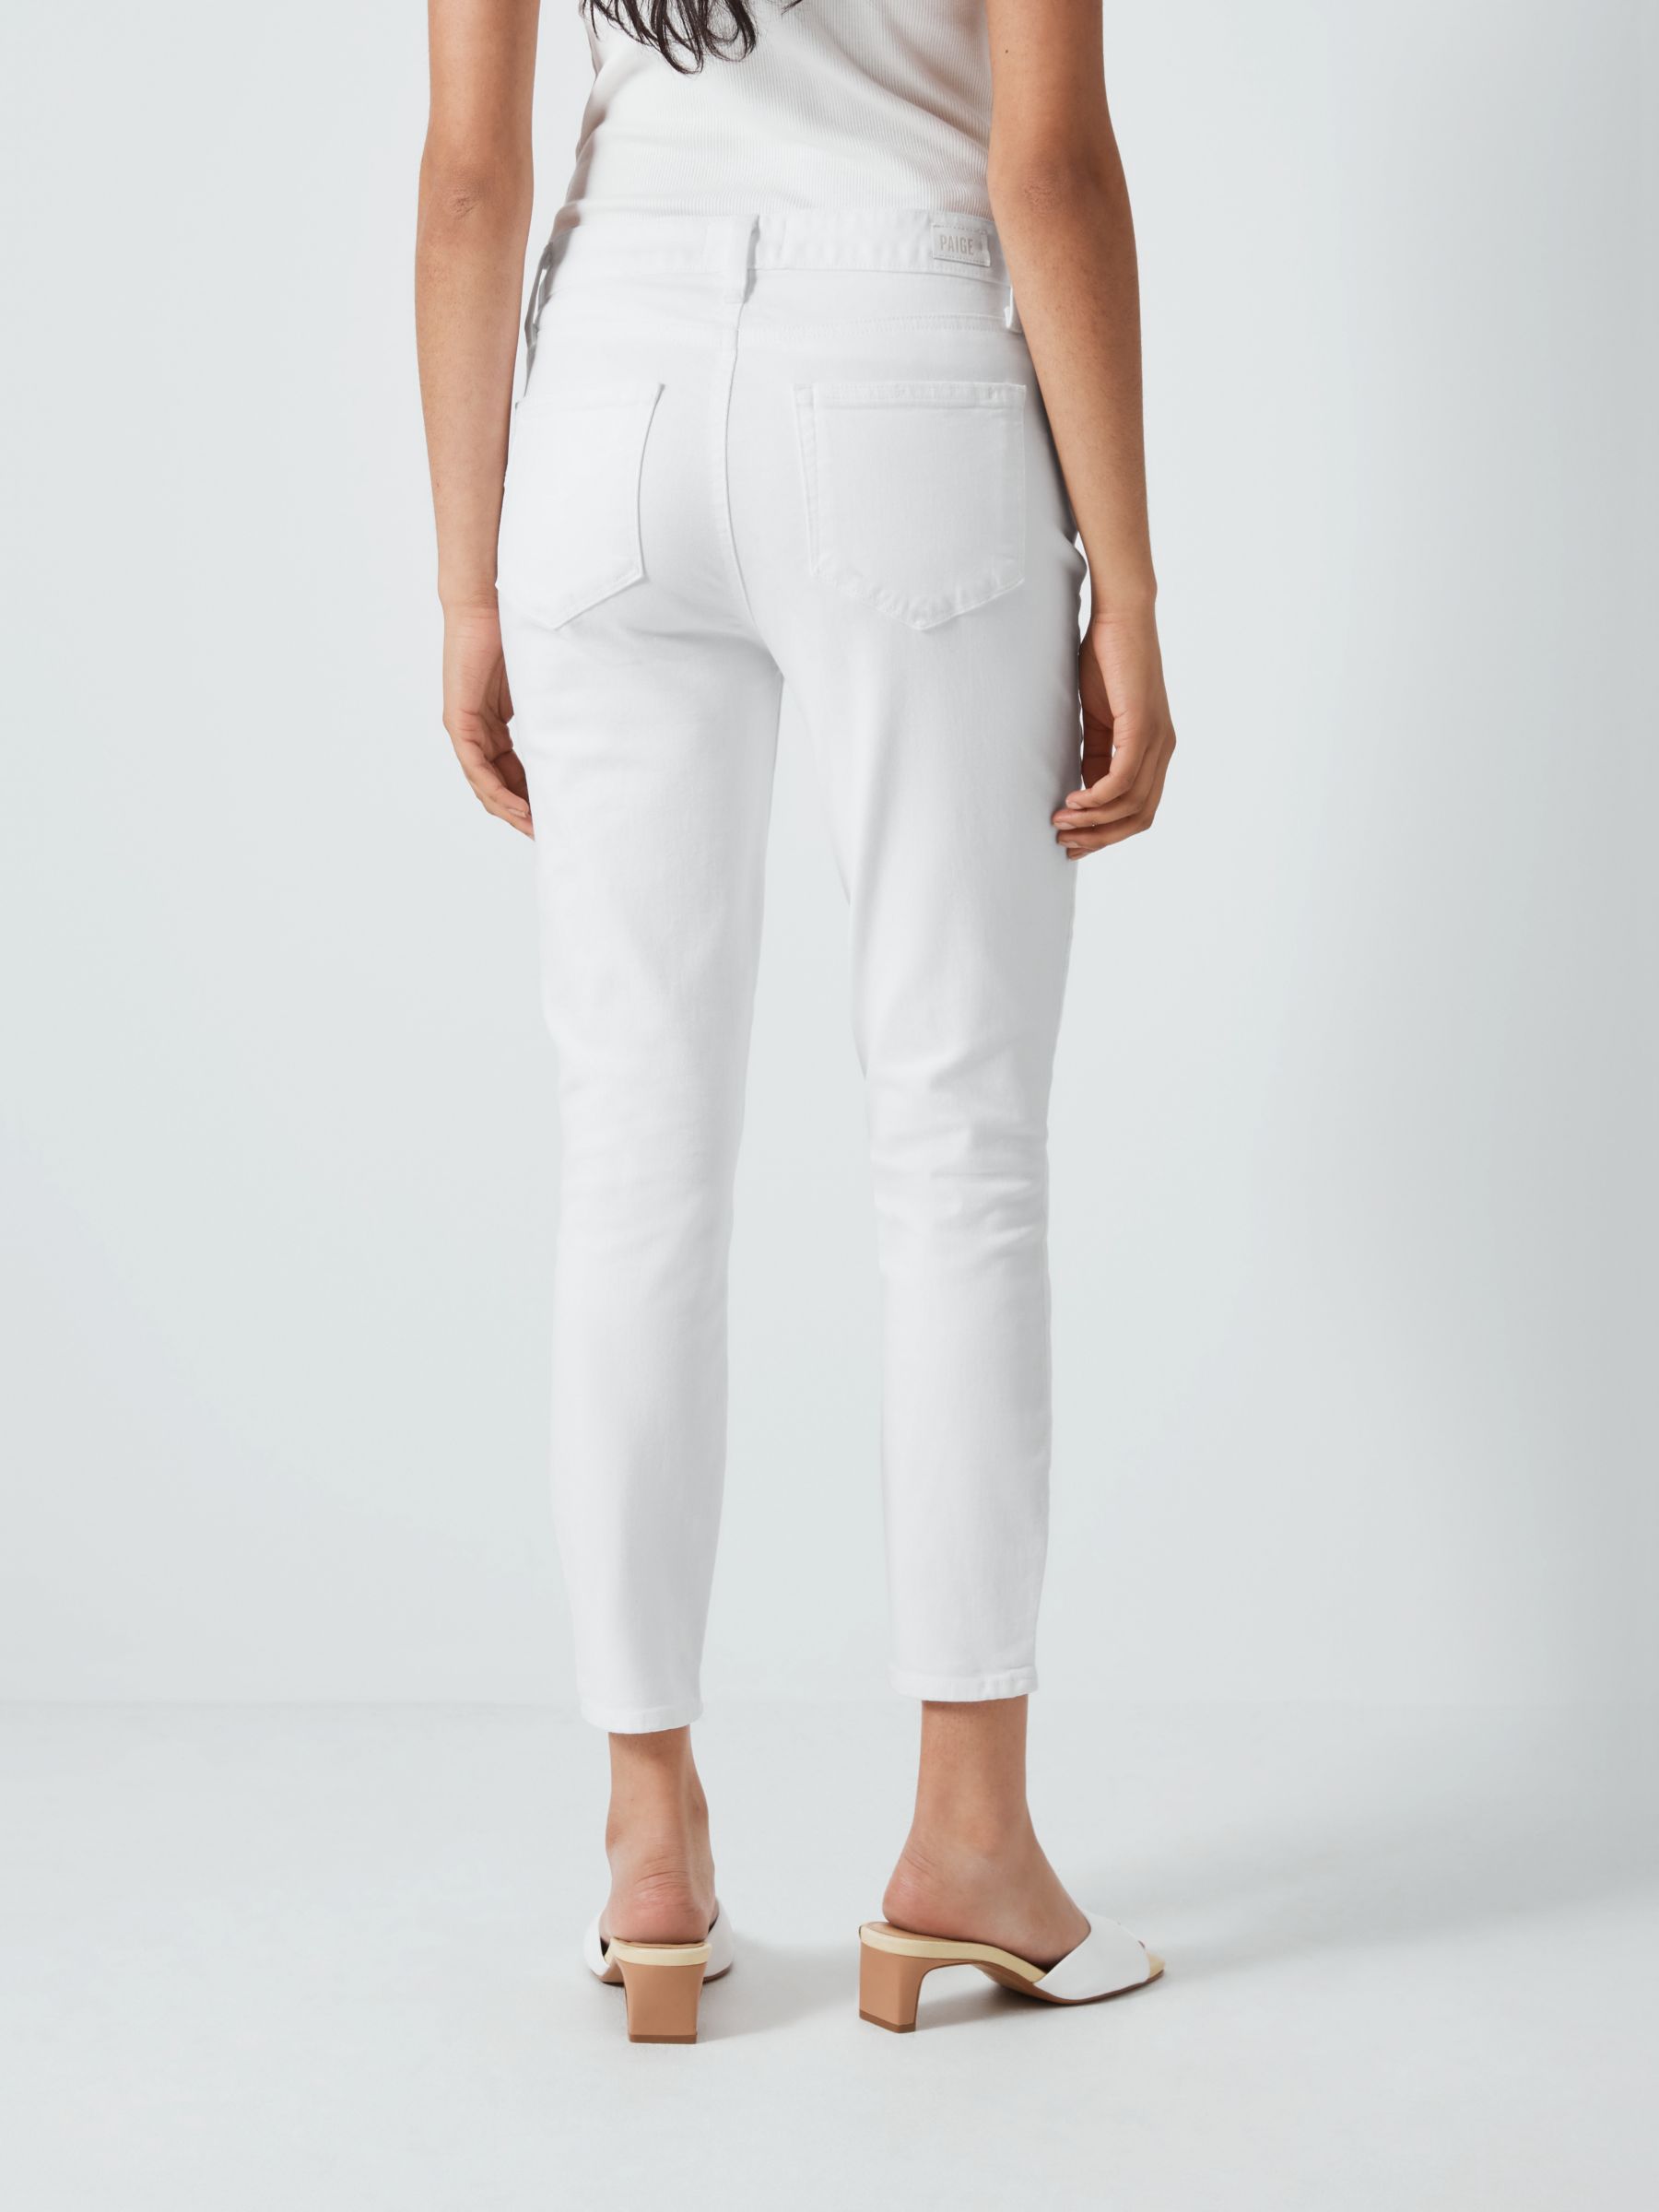 PAIGE Hoxton High Rise Ultra Skinny Jeans, Crisp White, 28